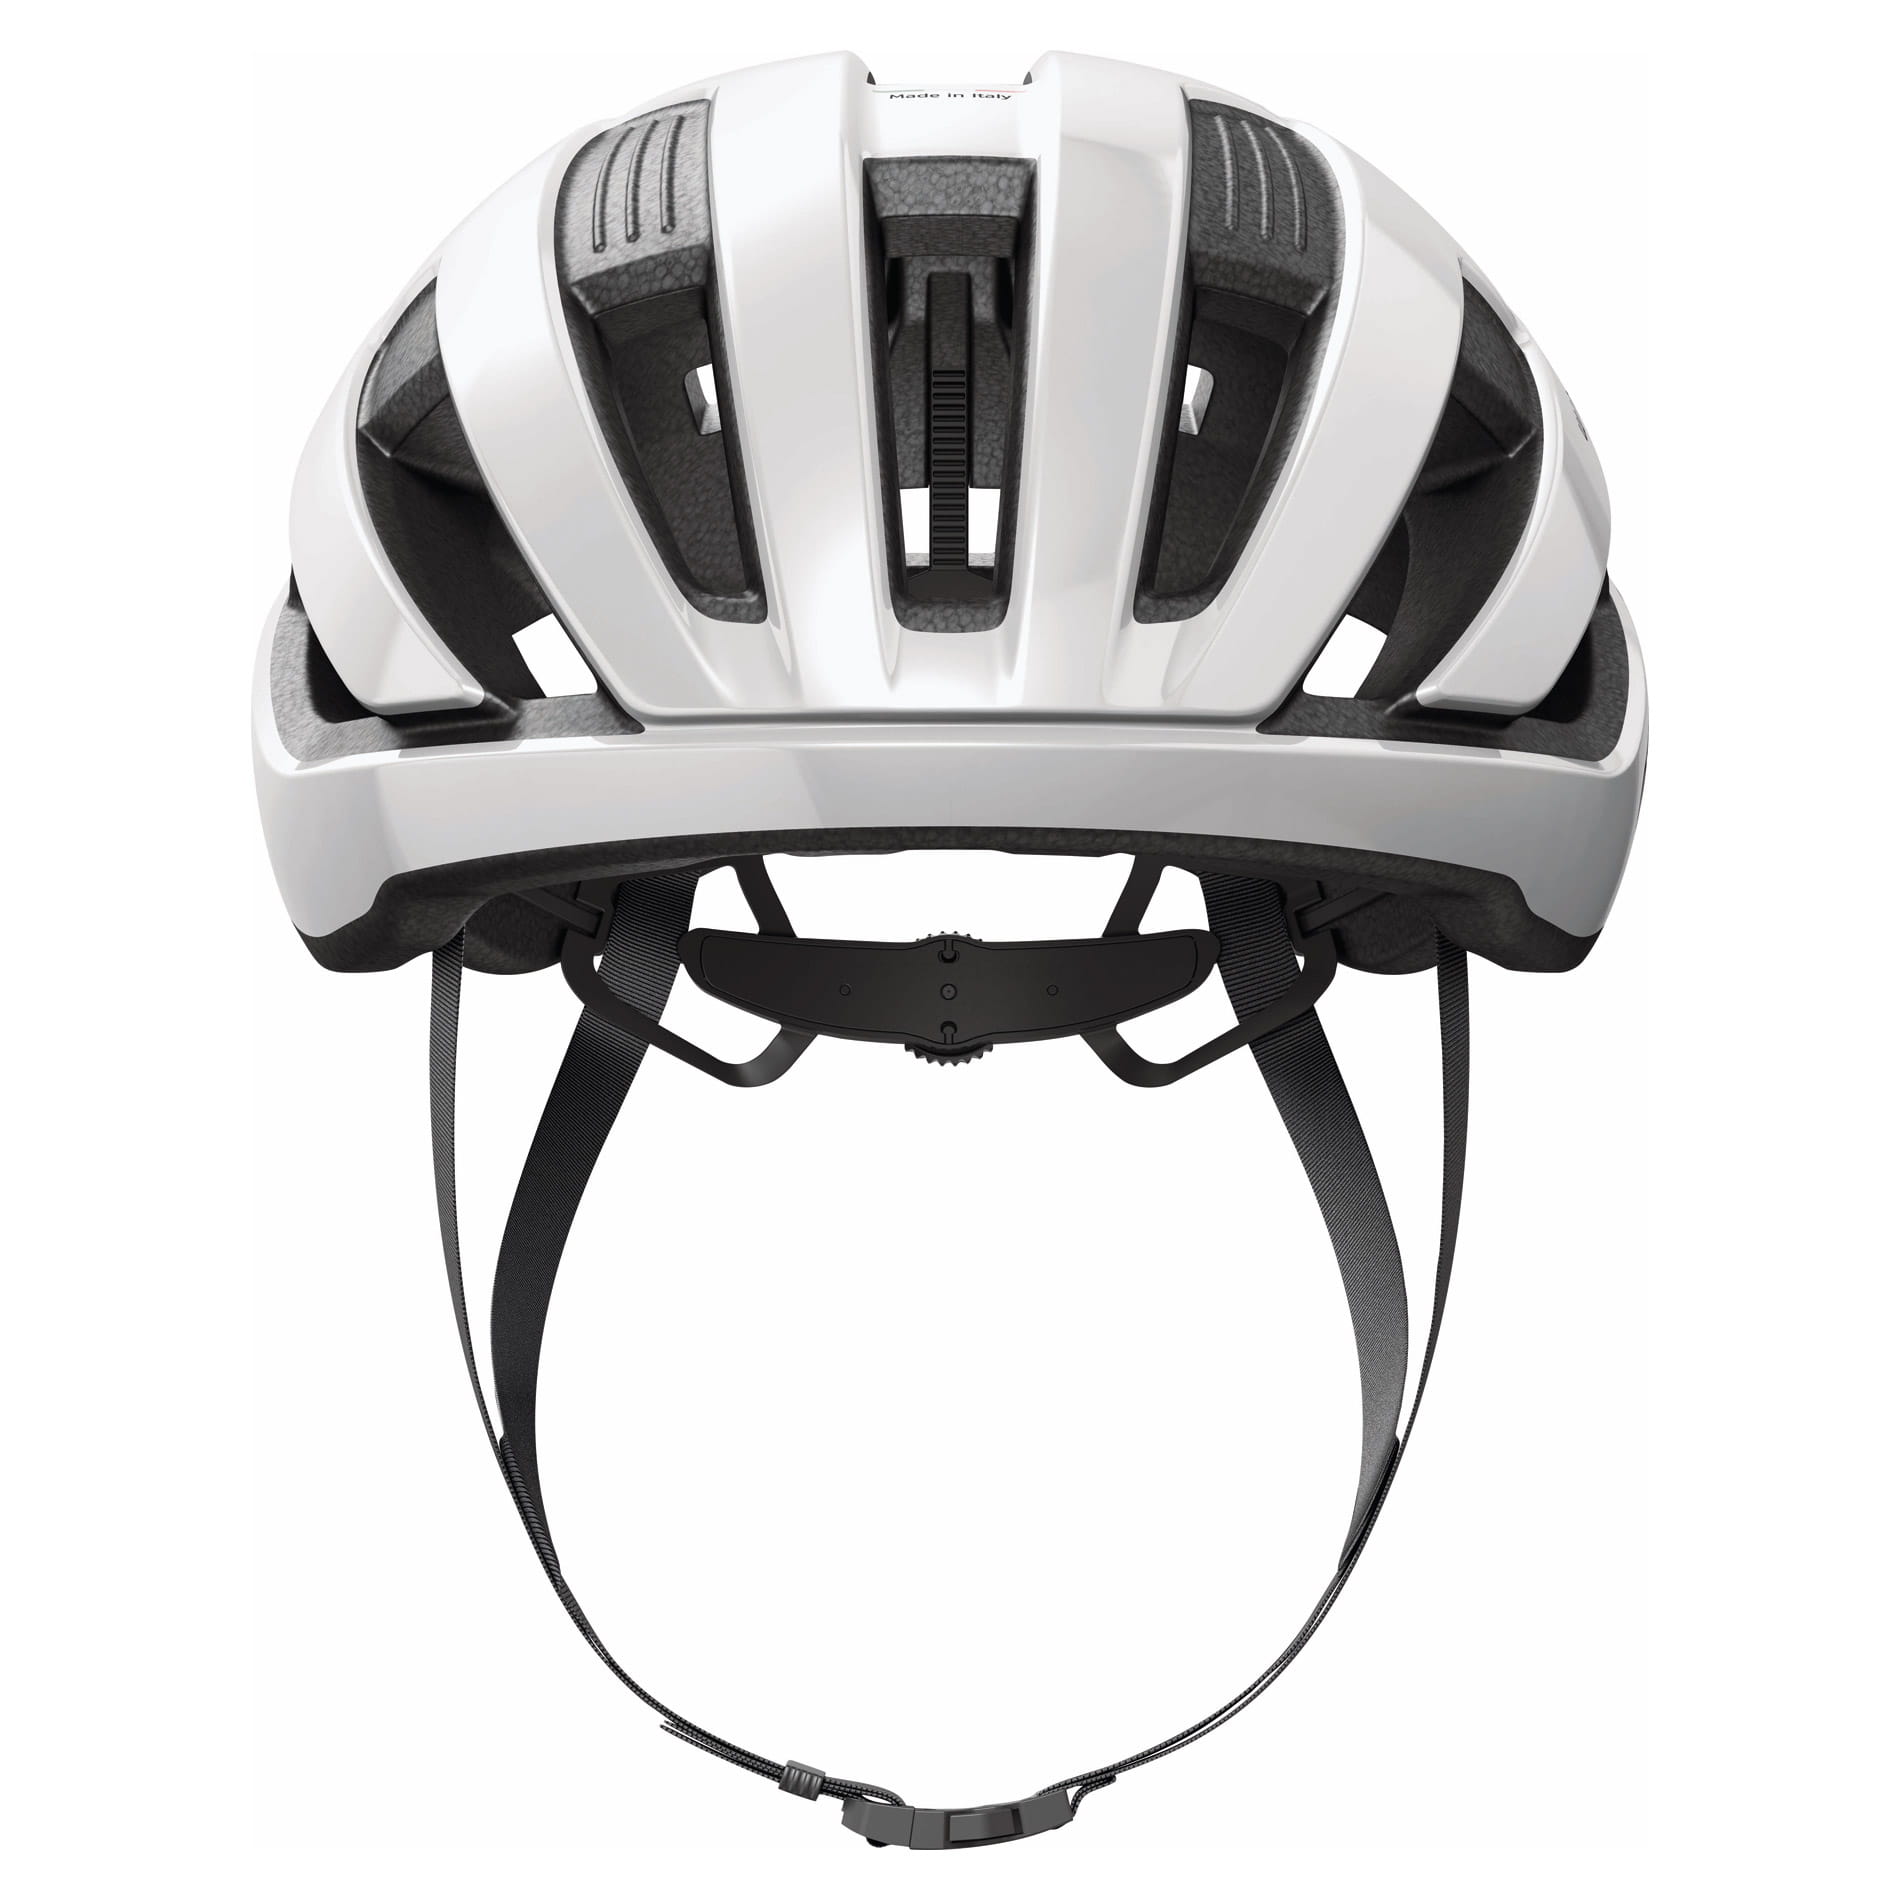 ABUS WingBack Road Helmet